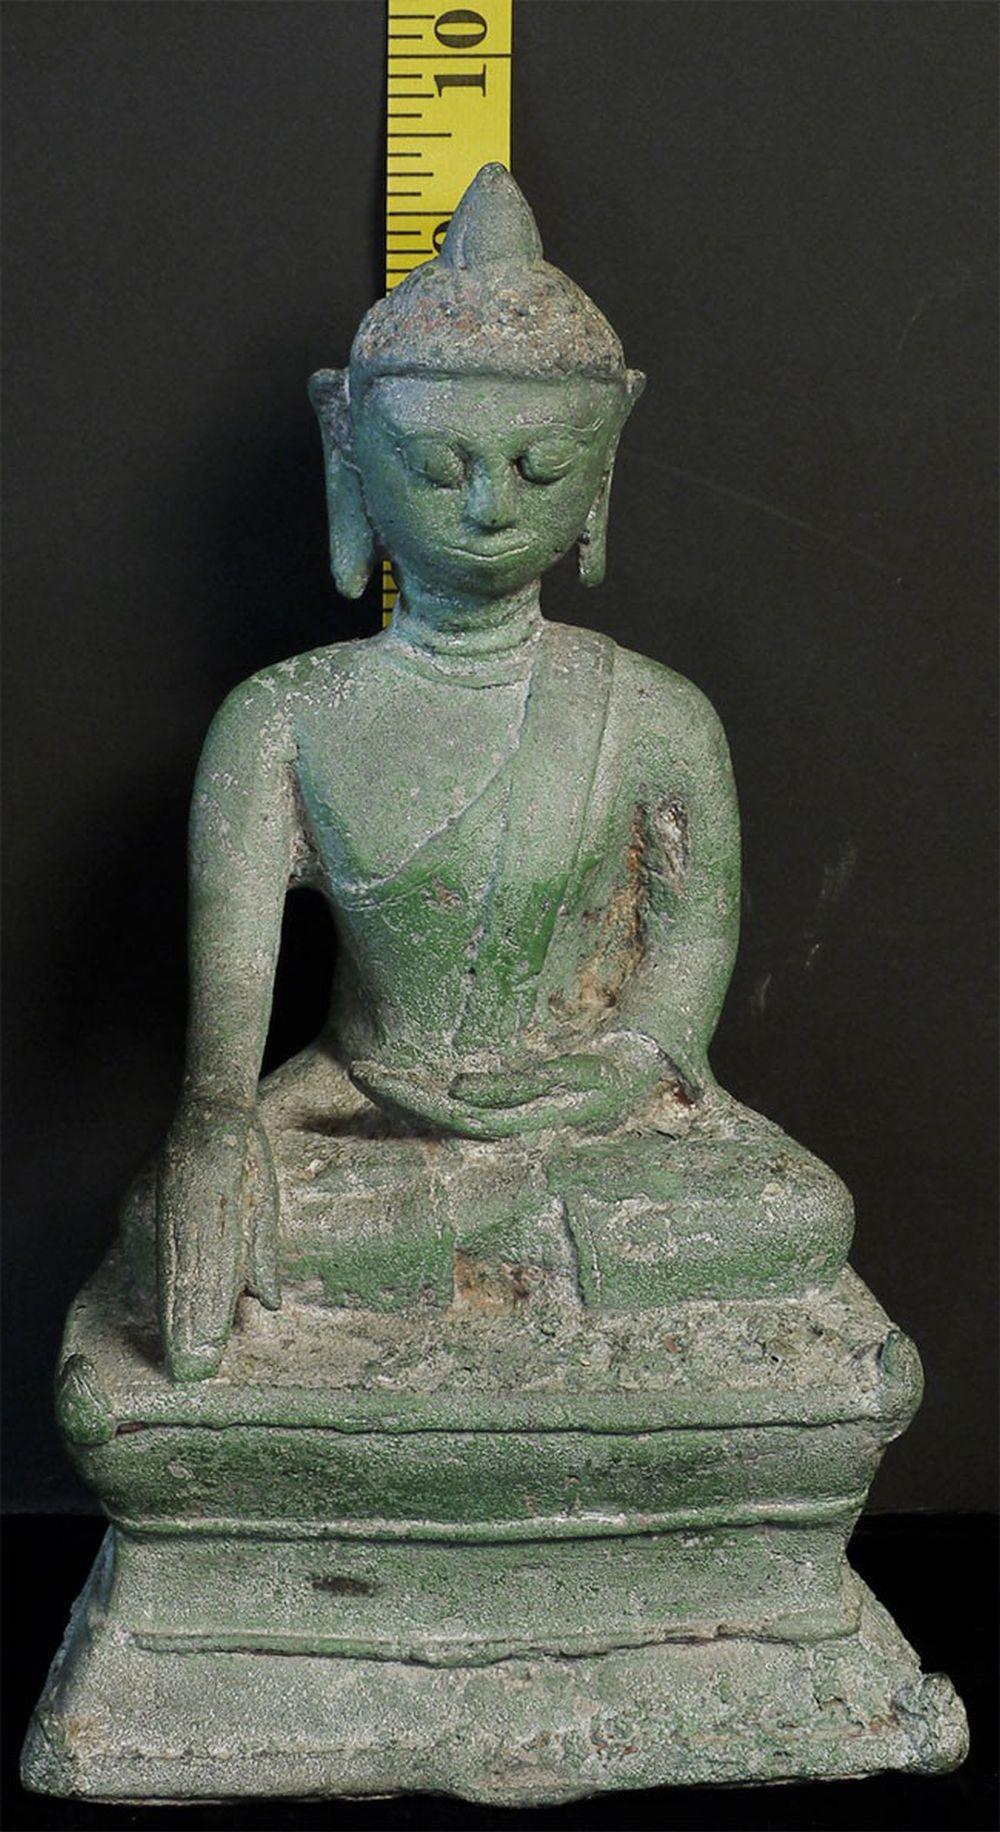  11. Jh. Bronze Buddha- Pyu/Pagan Burma Seltene, mächtige Antike- TL Test! - 8439 im Angebot 4